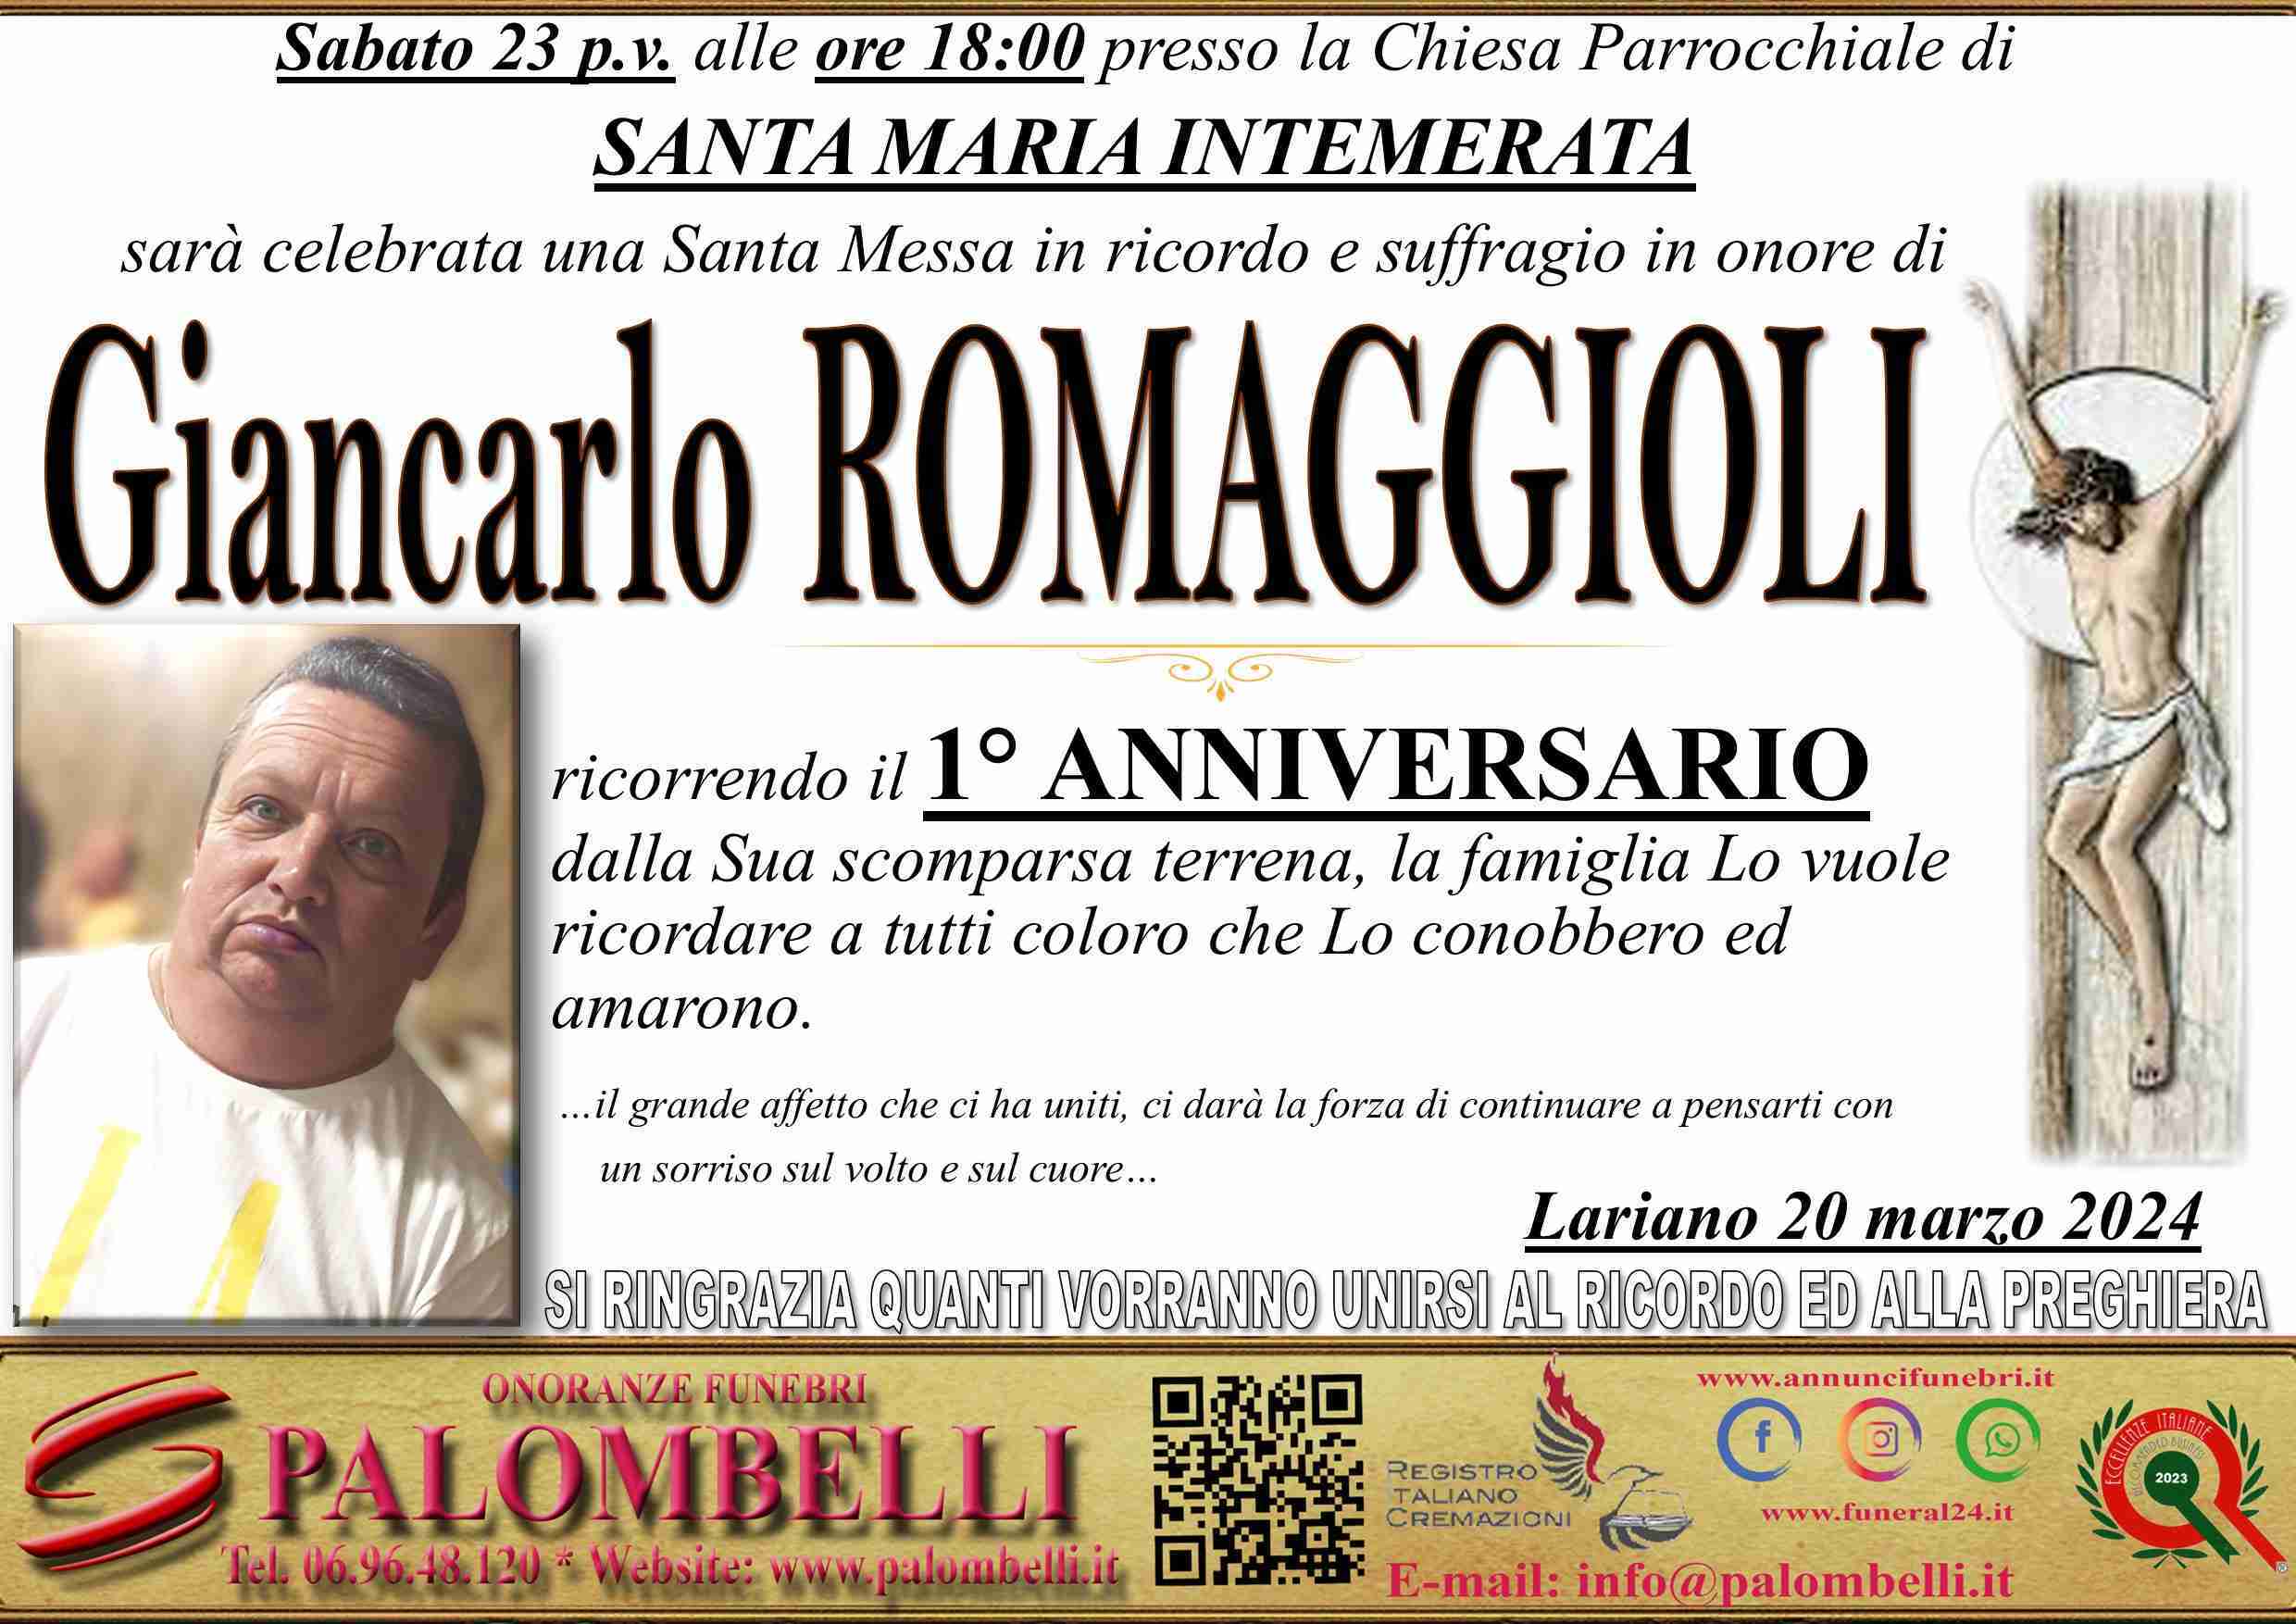 Giancarlo Romaggioli